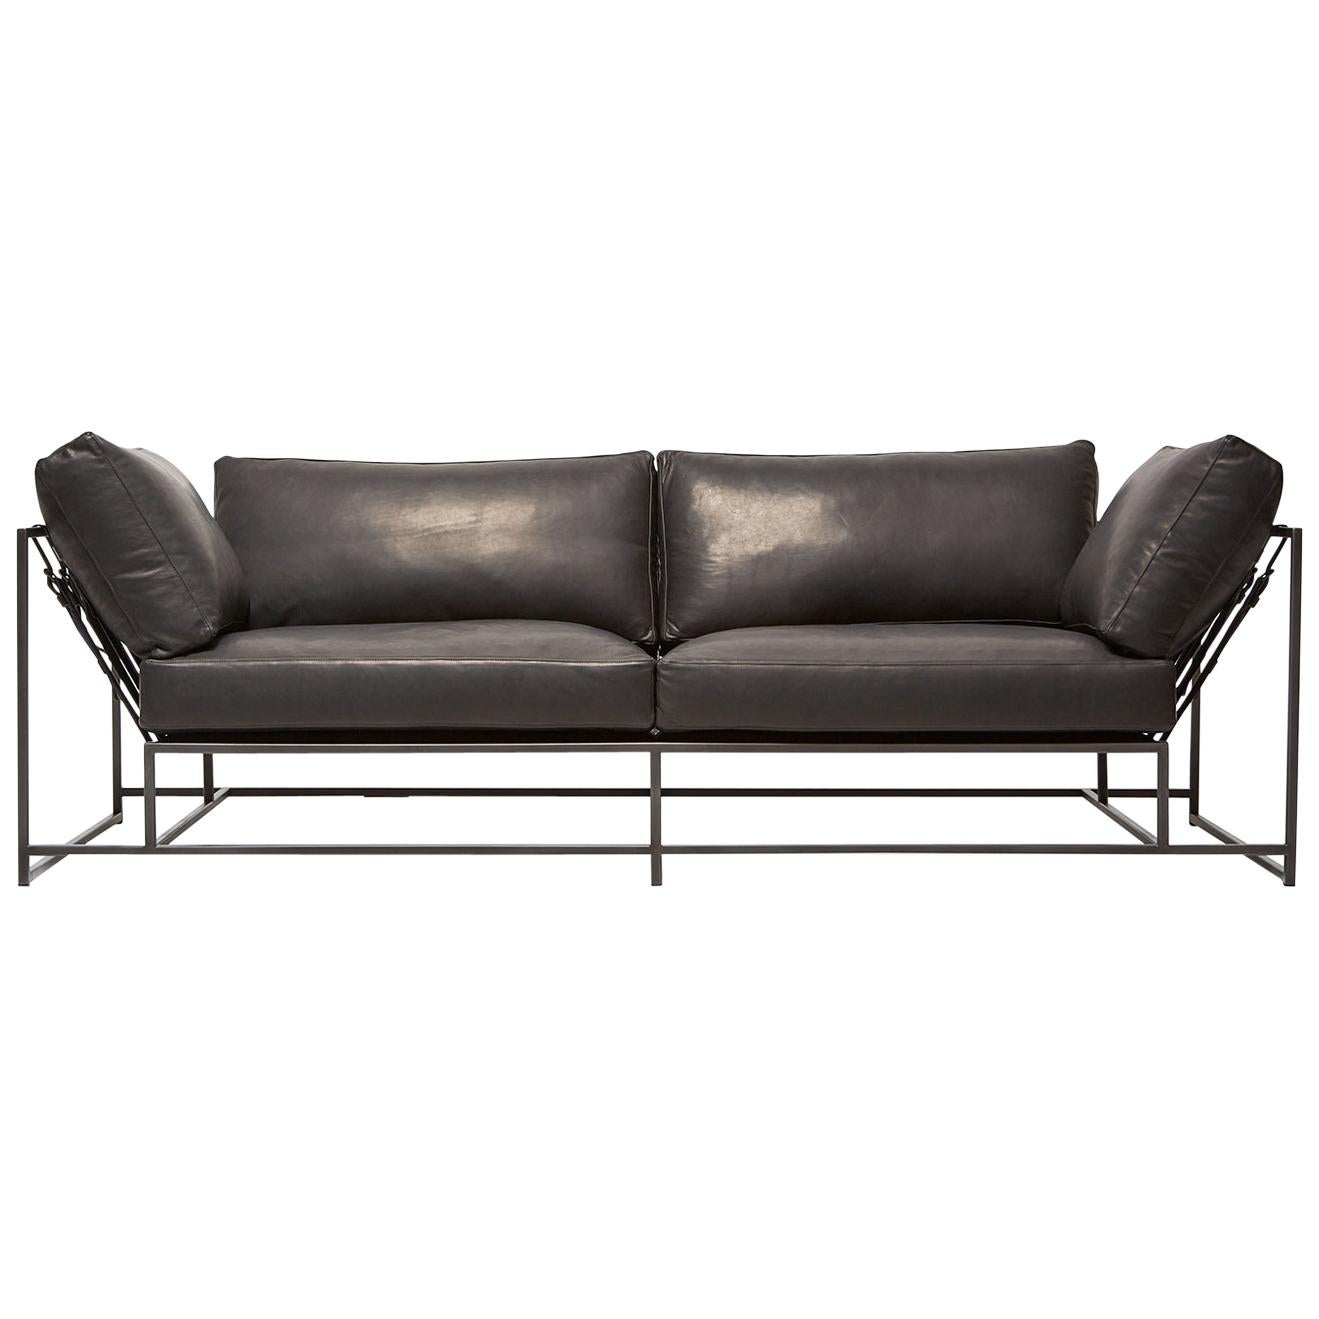 Valhalla Granite Leather and Blackened Steel Two-Seat Sofa